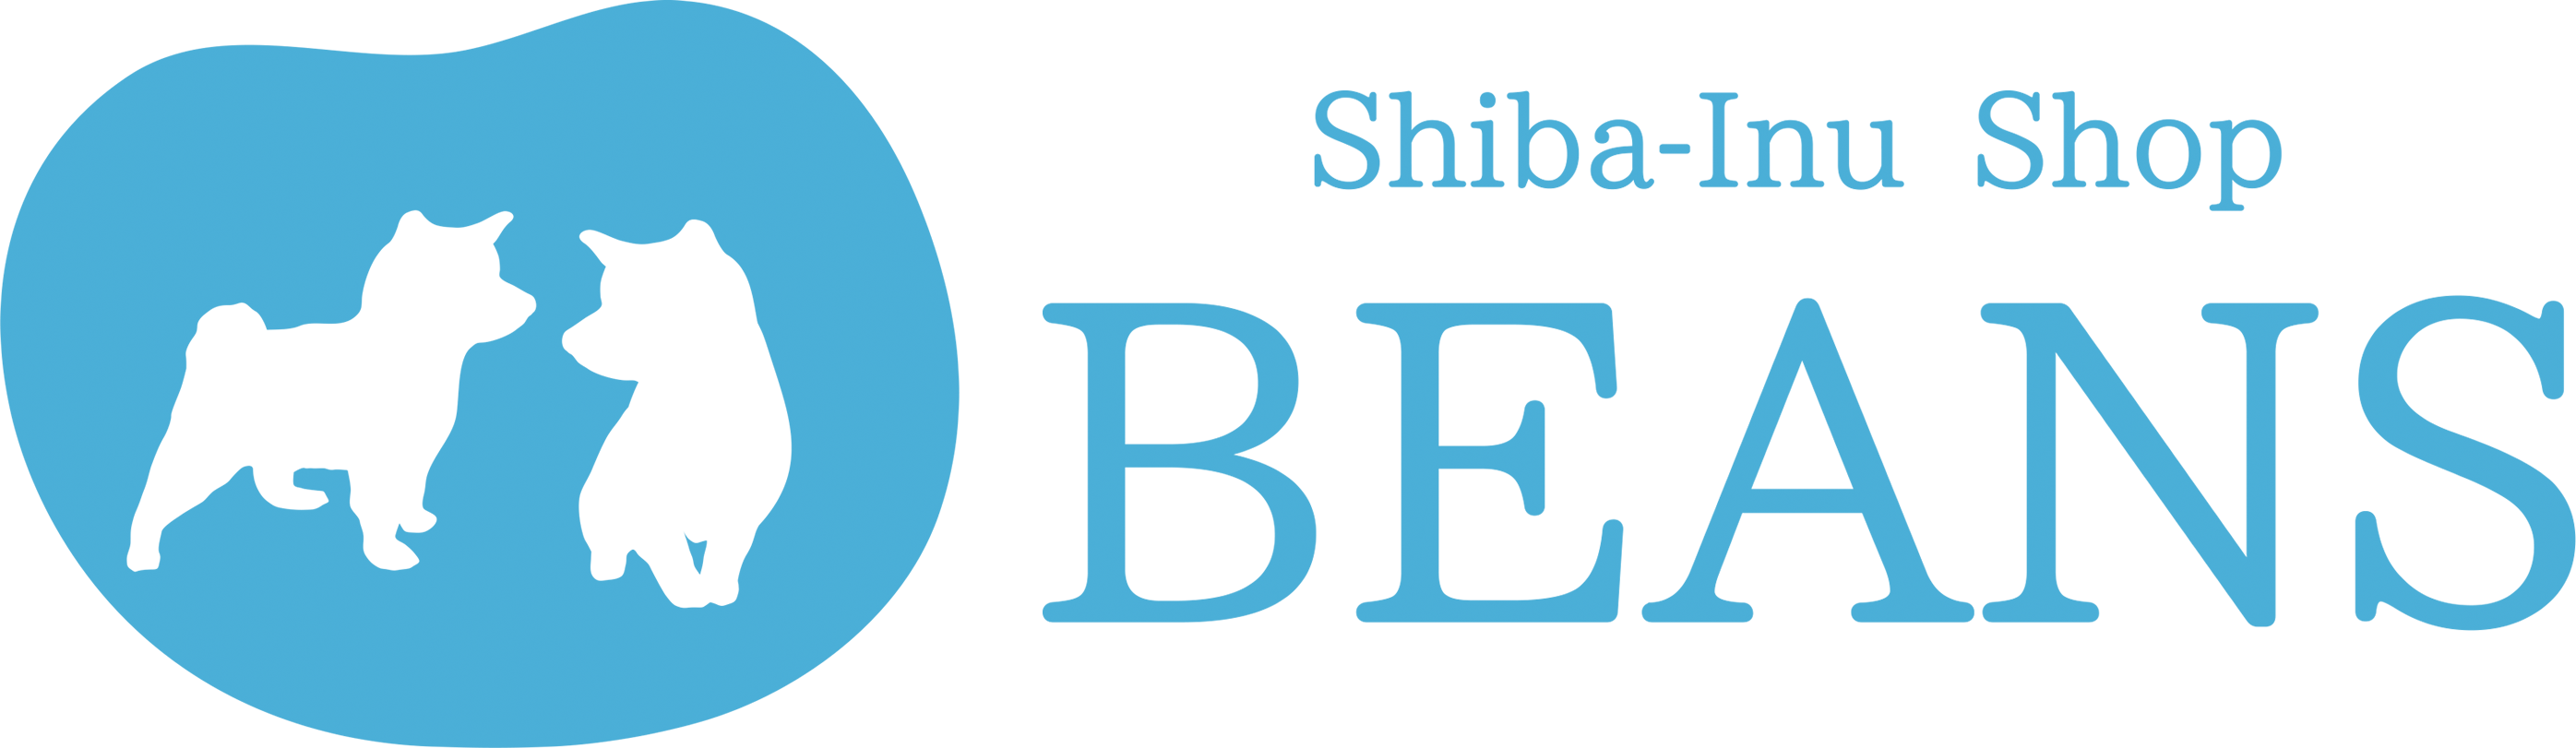 SHIBA-INU SHOP BEANS